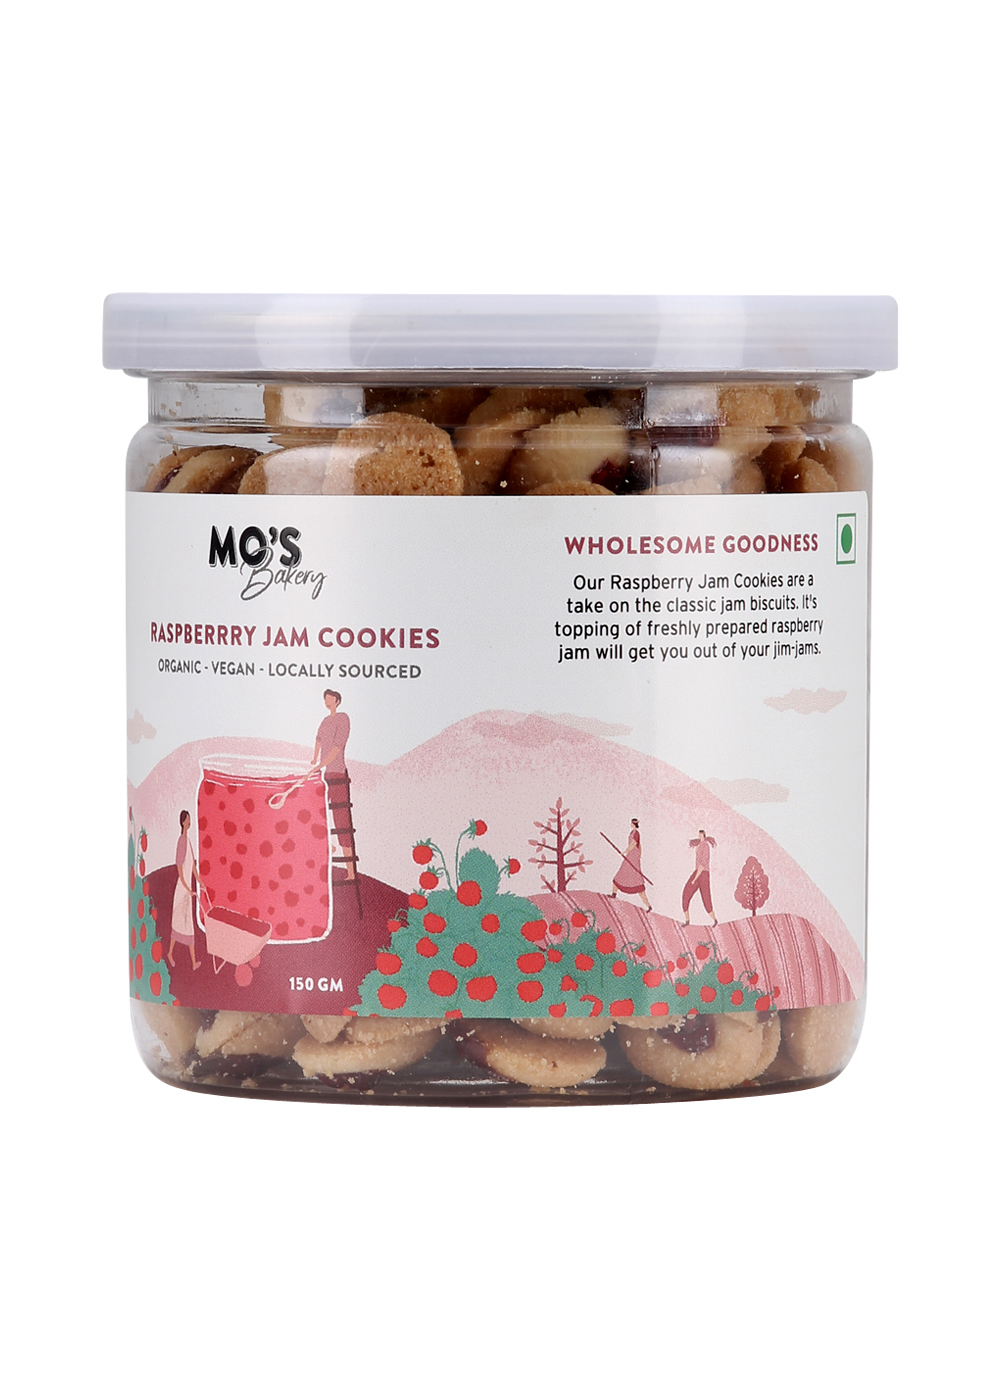 Product: Mo’s Bakery Raspberry Jam Cookies